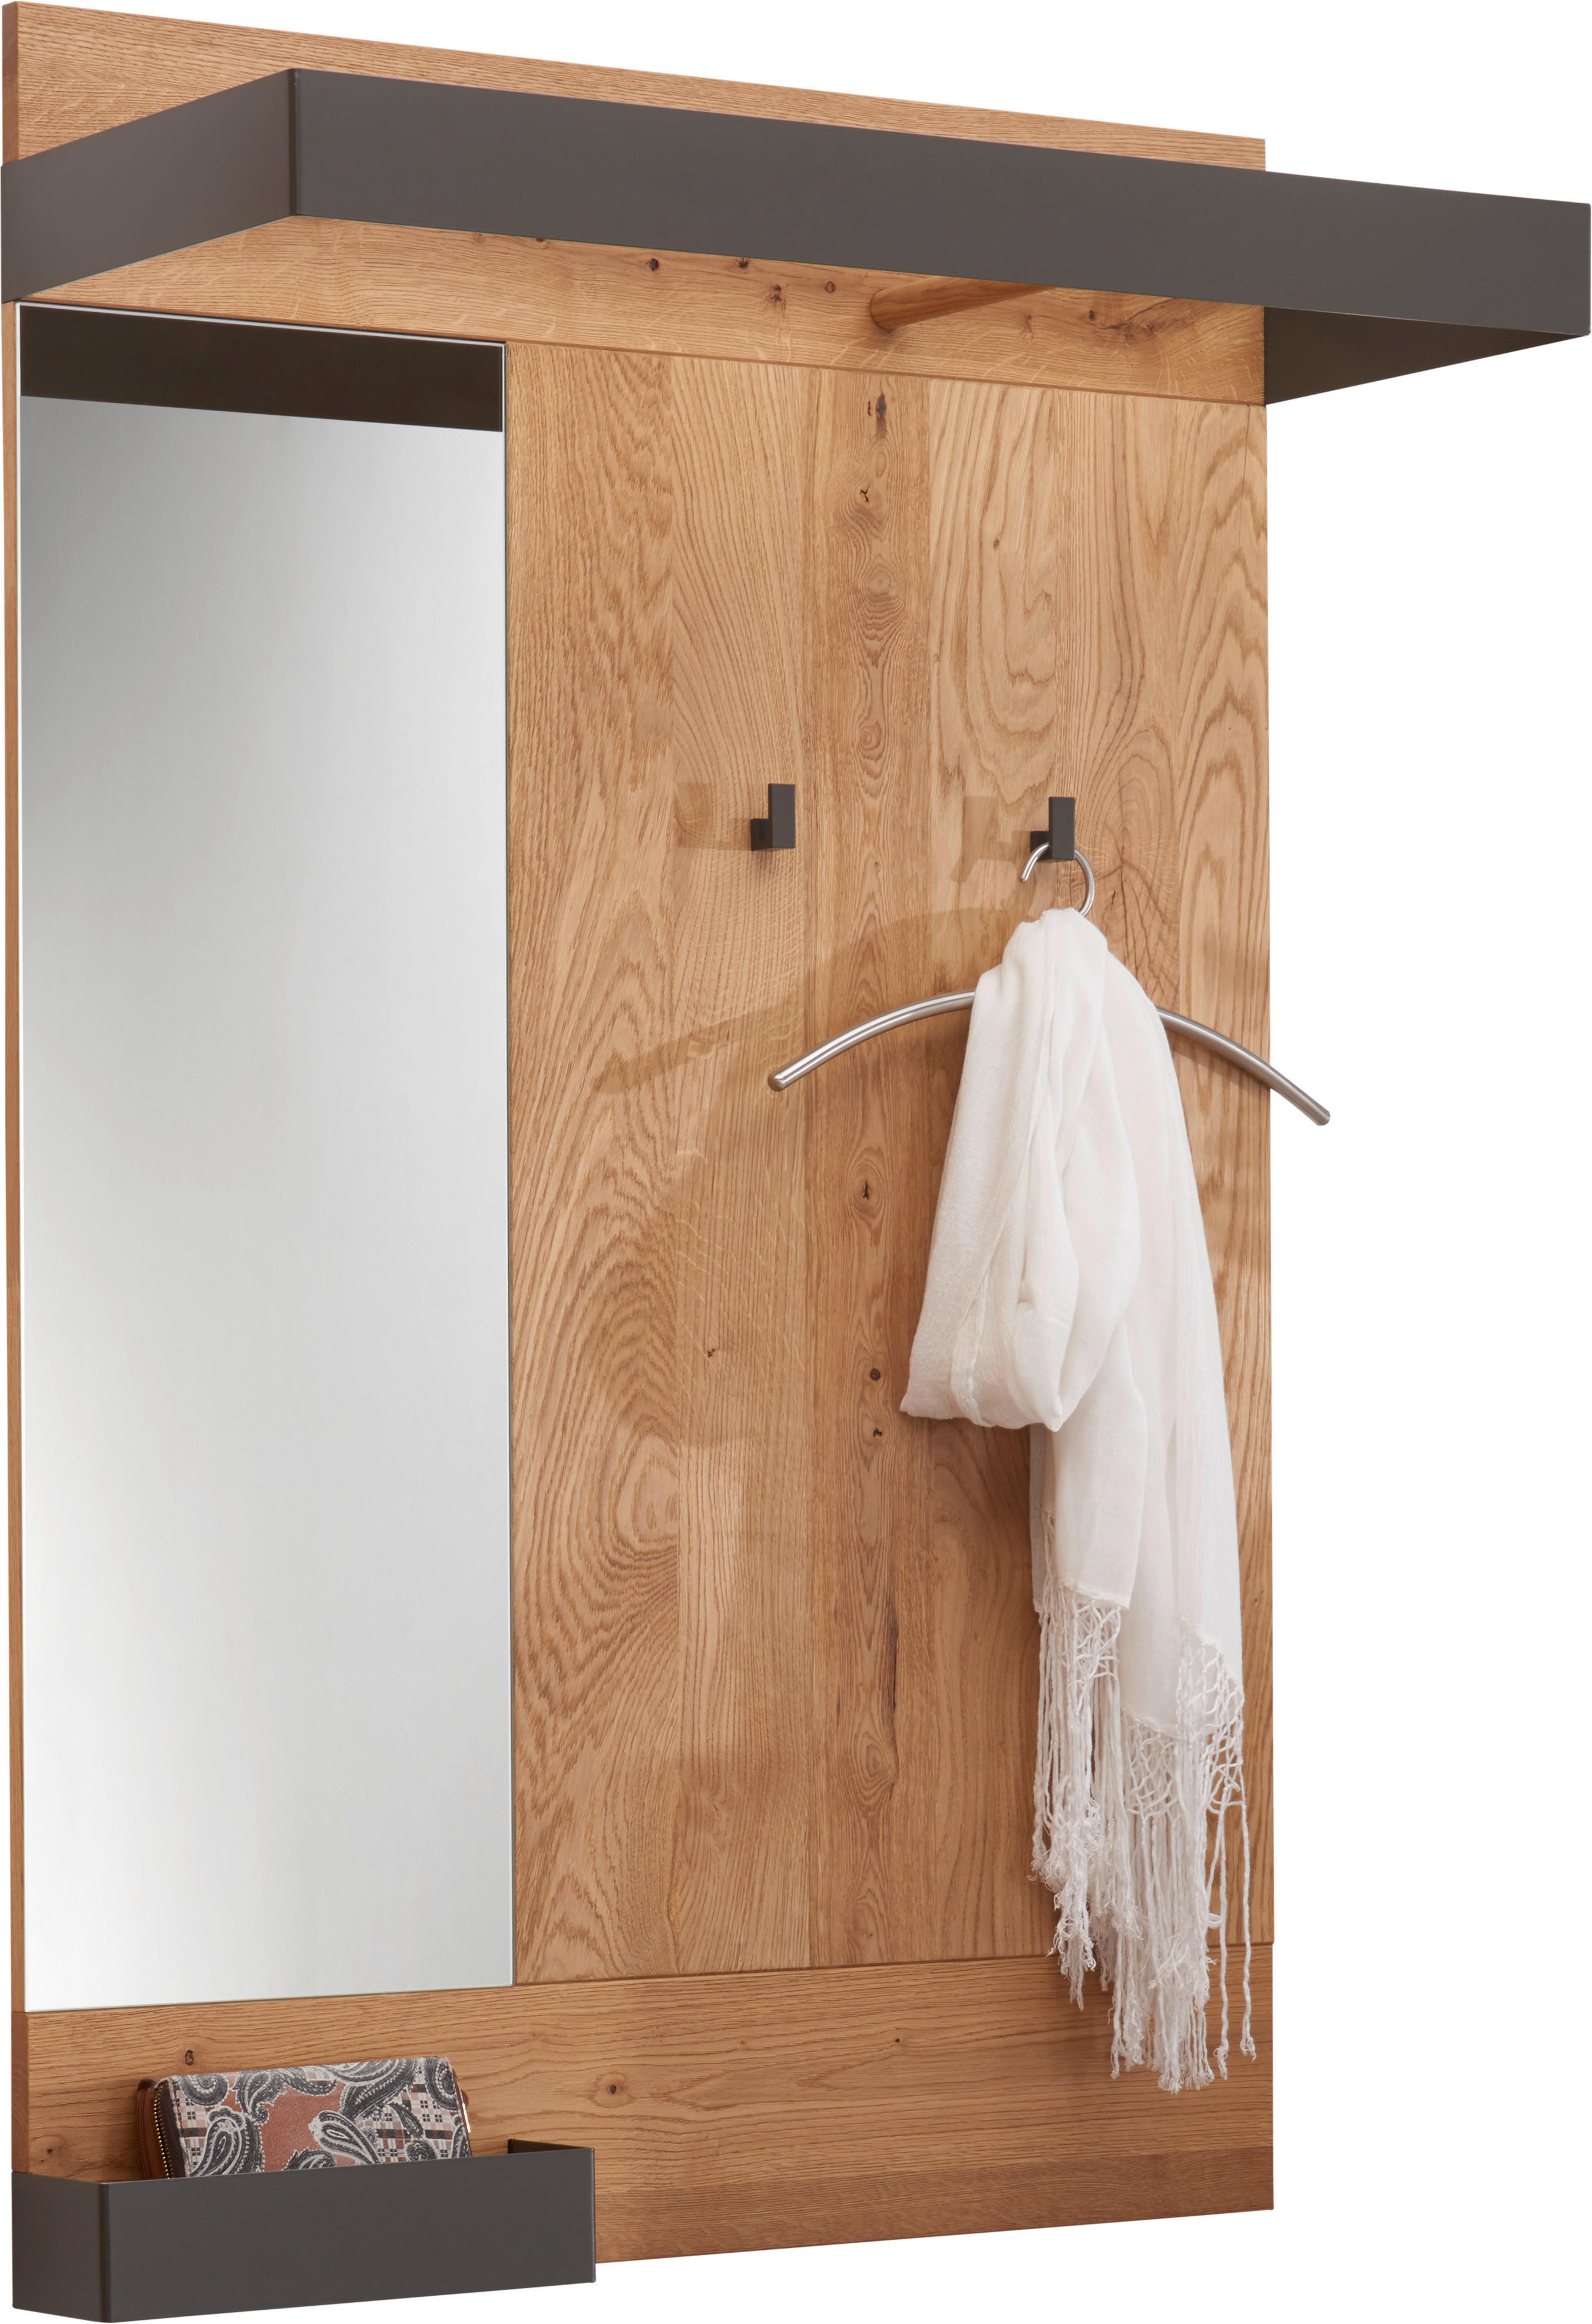 Massivholz Garderoben-paneel Kiefer massiv gelaugt geölt Wand-garderobe Holz